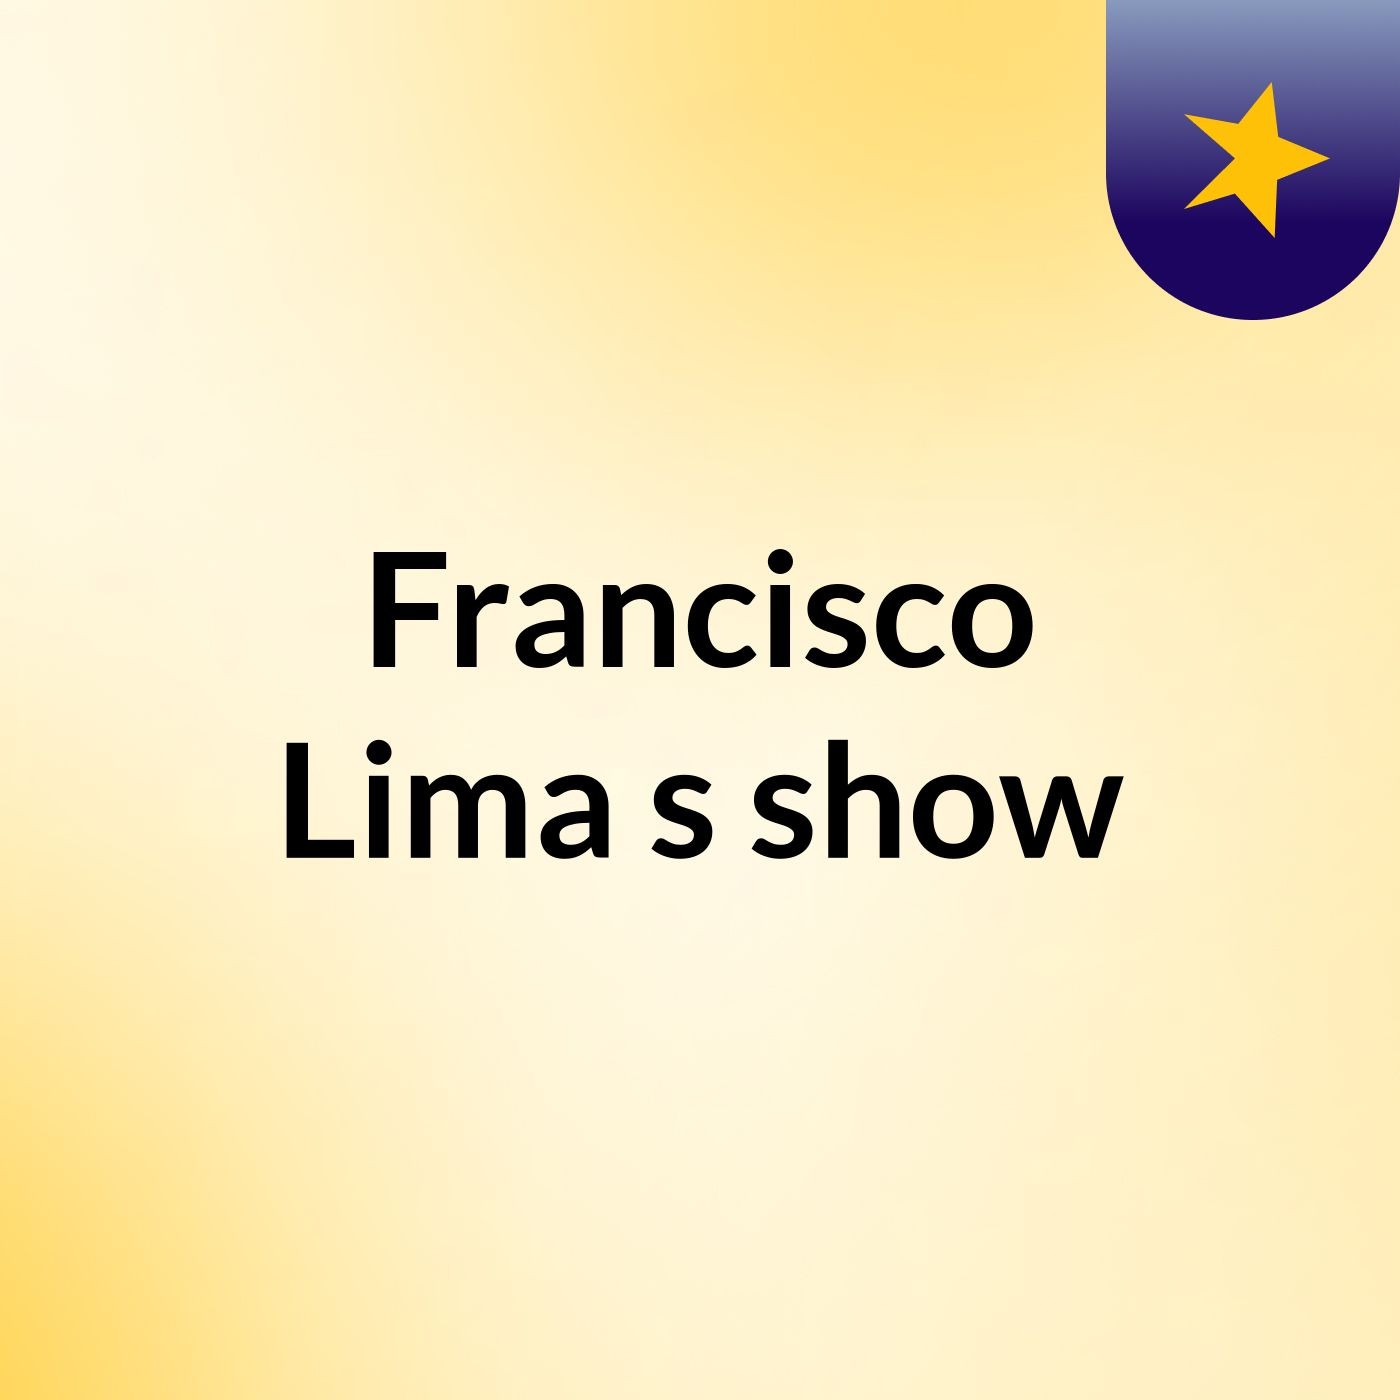 Francisco Lima's show